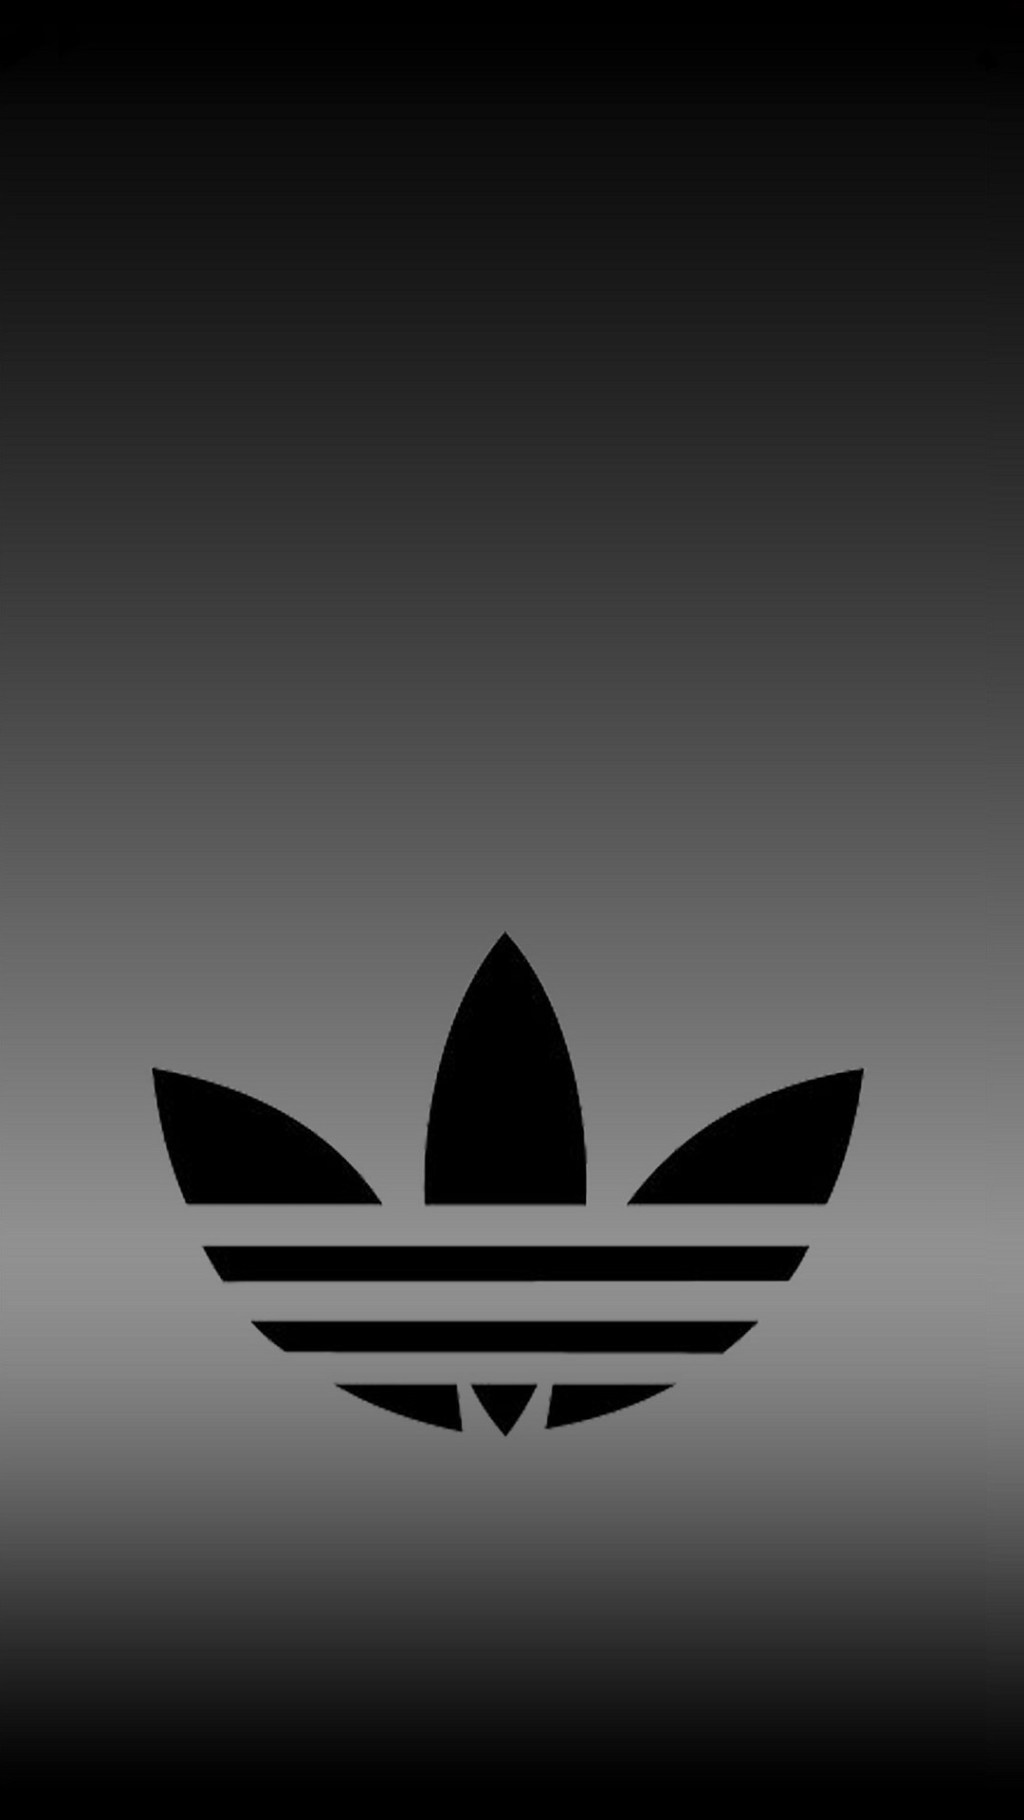 3D iPhone Wallpaper on X: "Adidas Logo iPhone 6 Wallpaper  https://t.co/cc78h9TfOZ https://t.co/IV5uq08kBy" / X